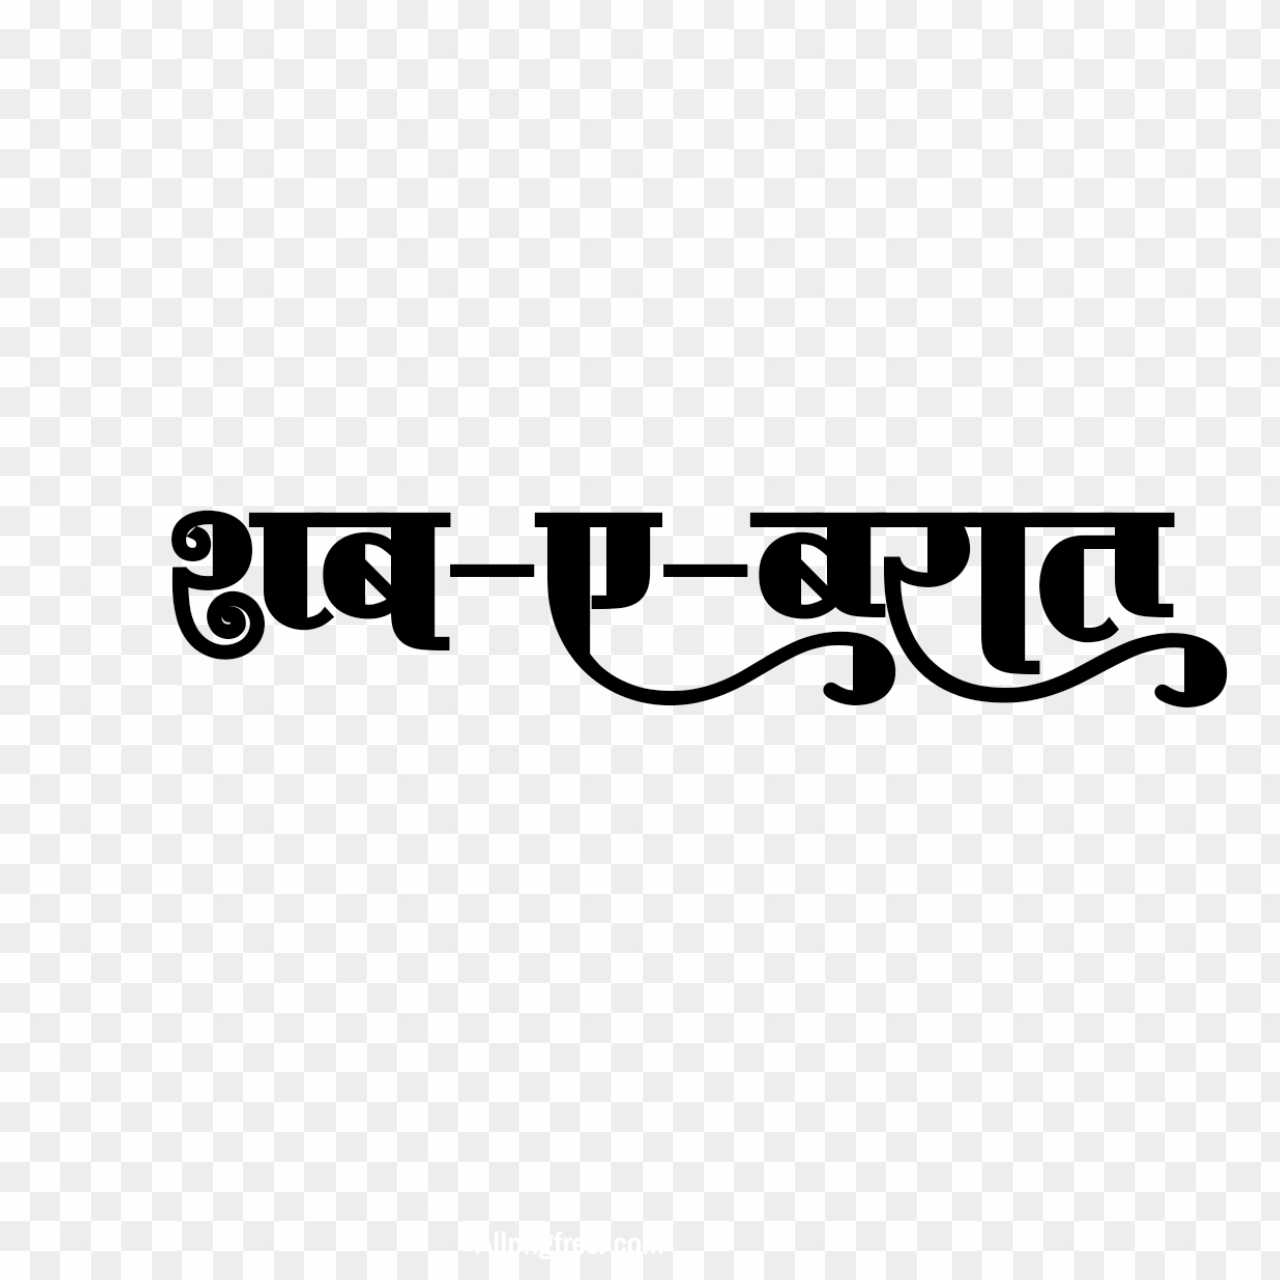 Shab e Barat stylist Hindi text PNG image download 